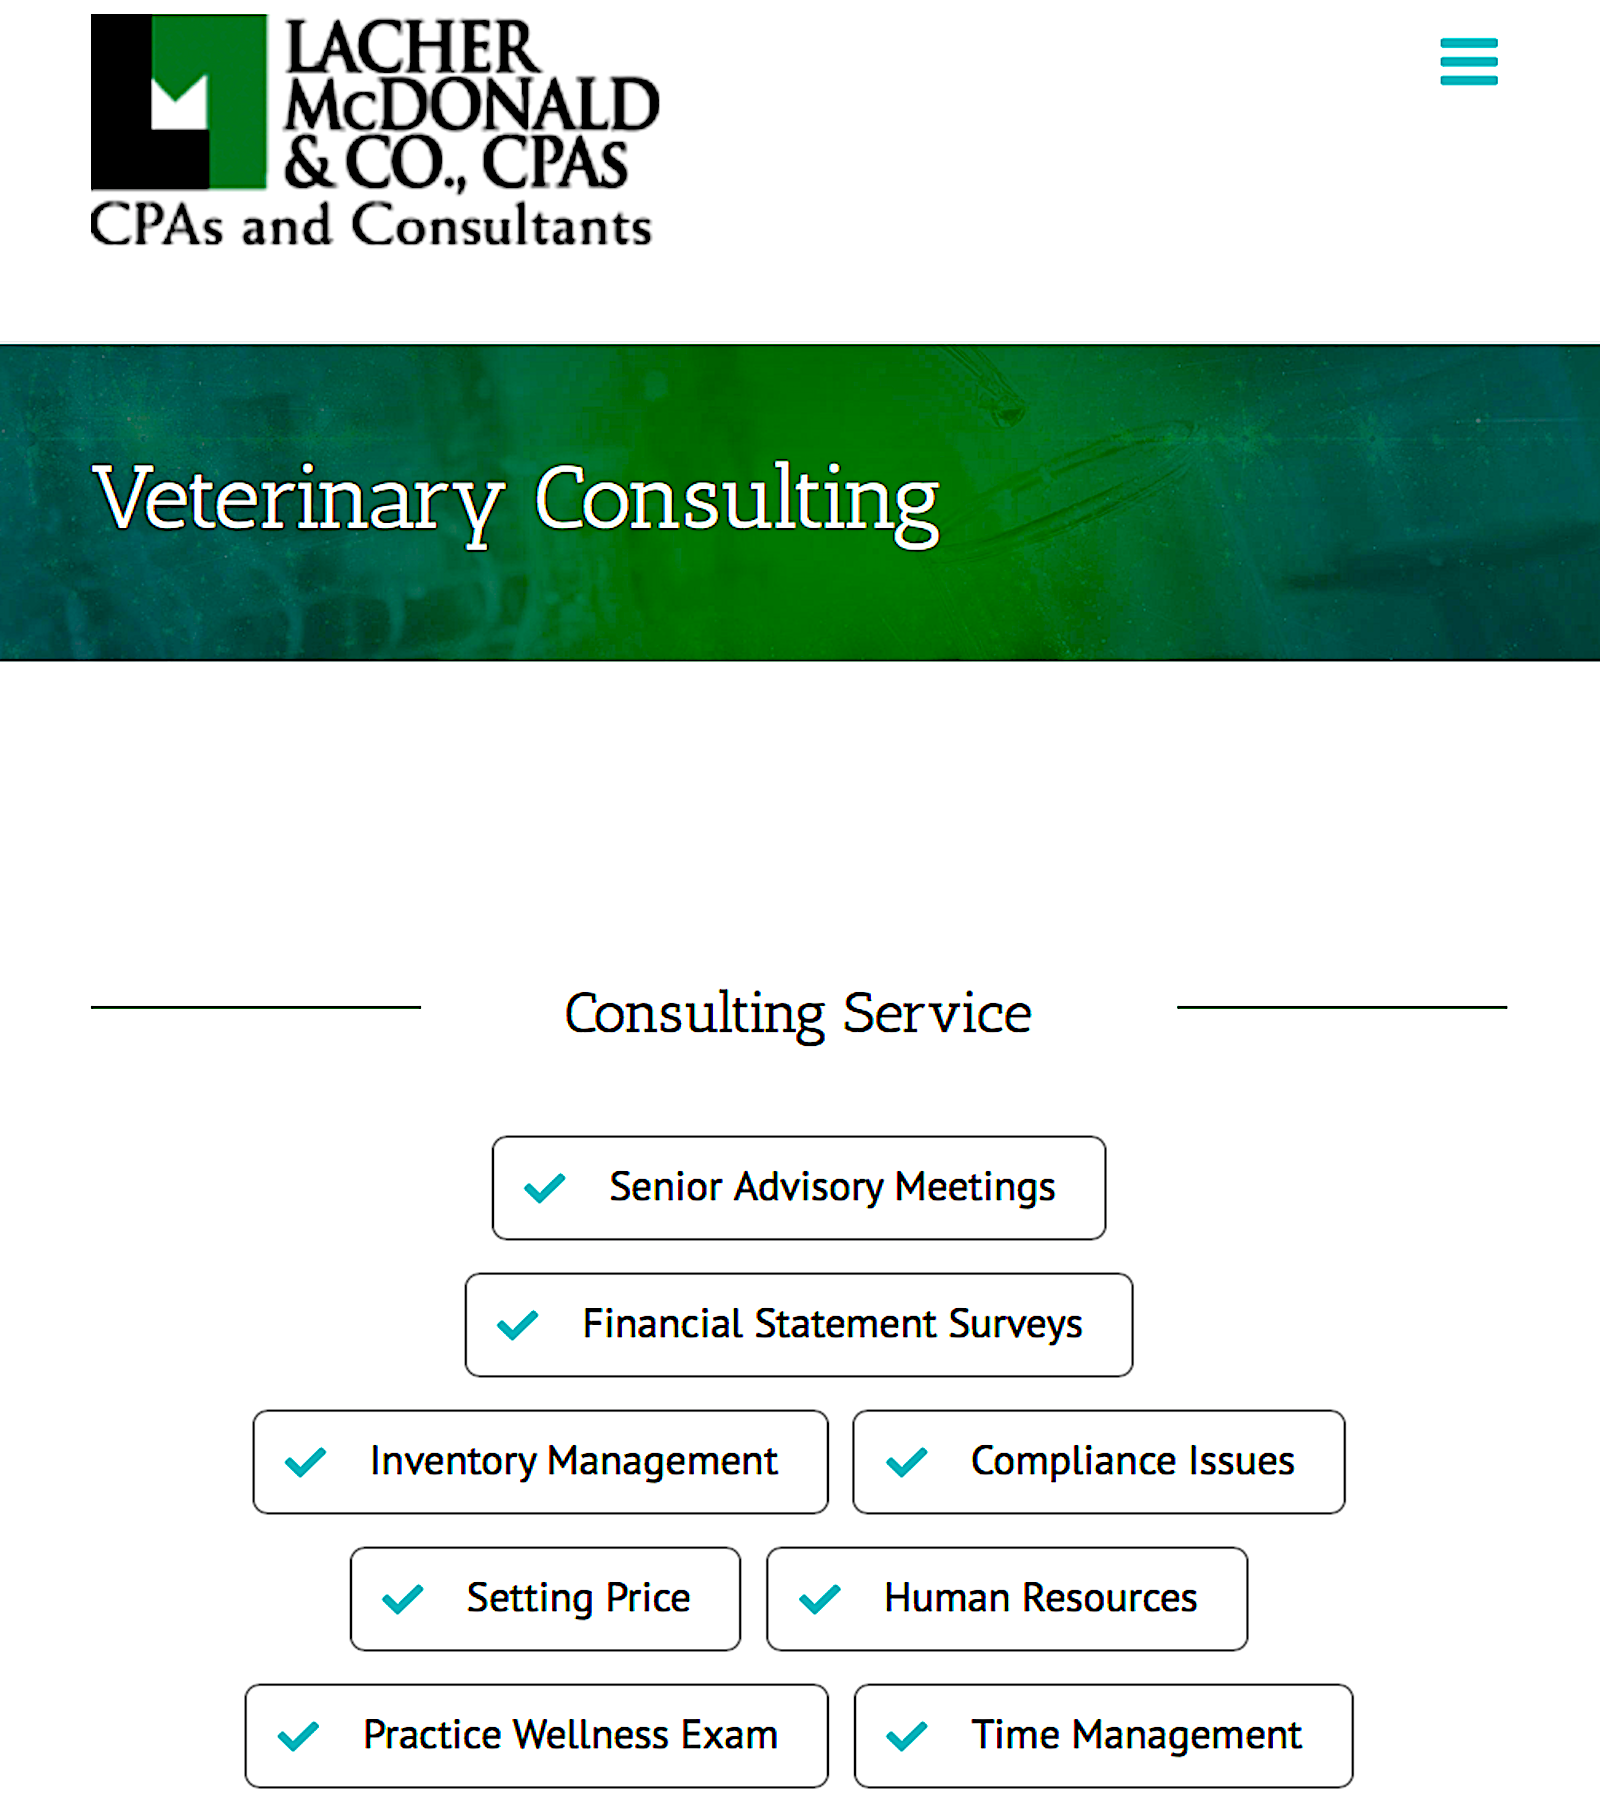 LACHER McDONALD & CO: veterinary consultants and CPAs - Vital Vet